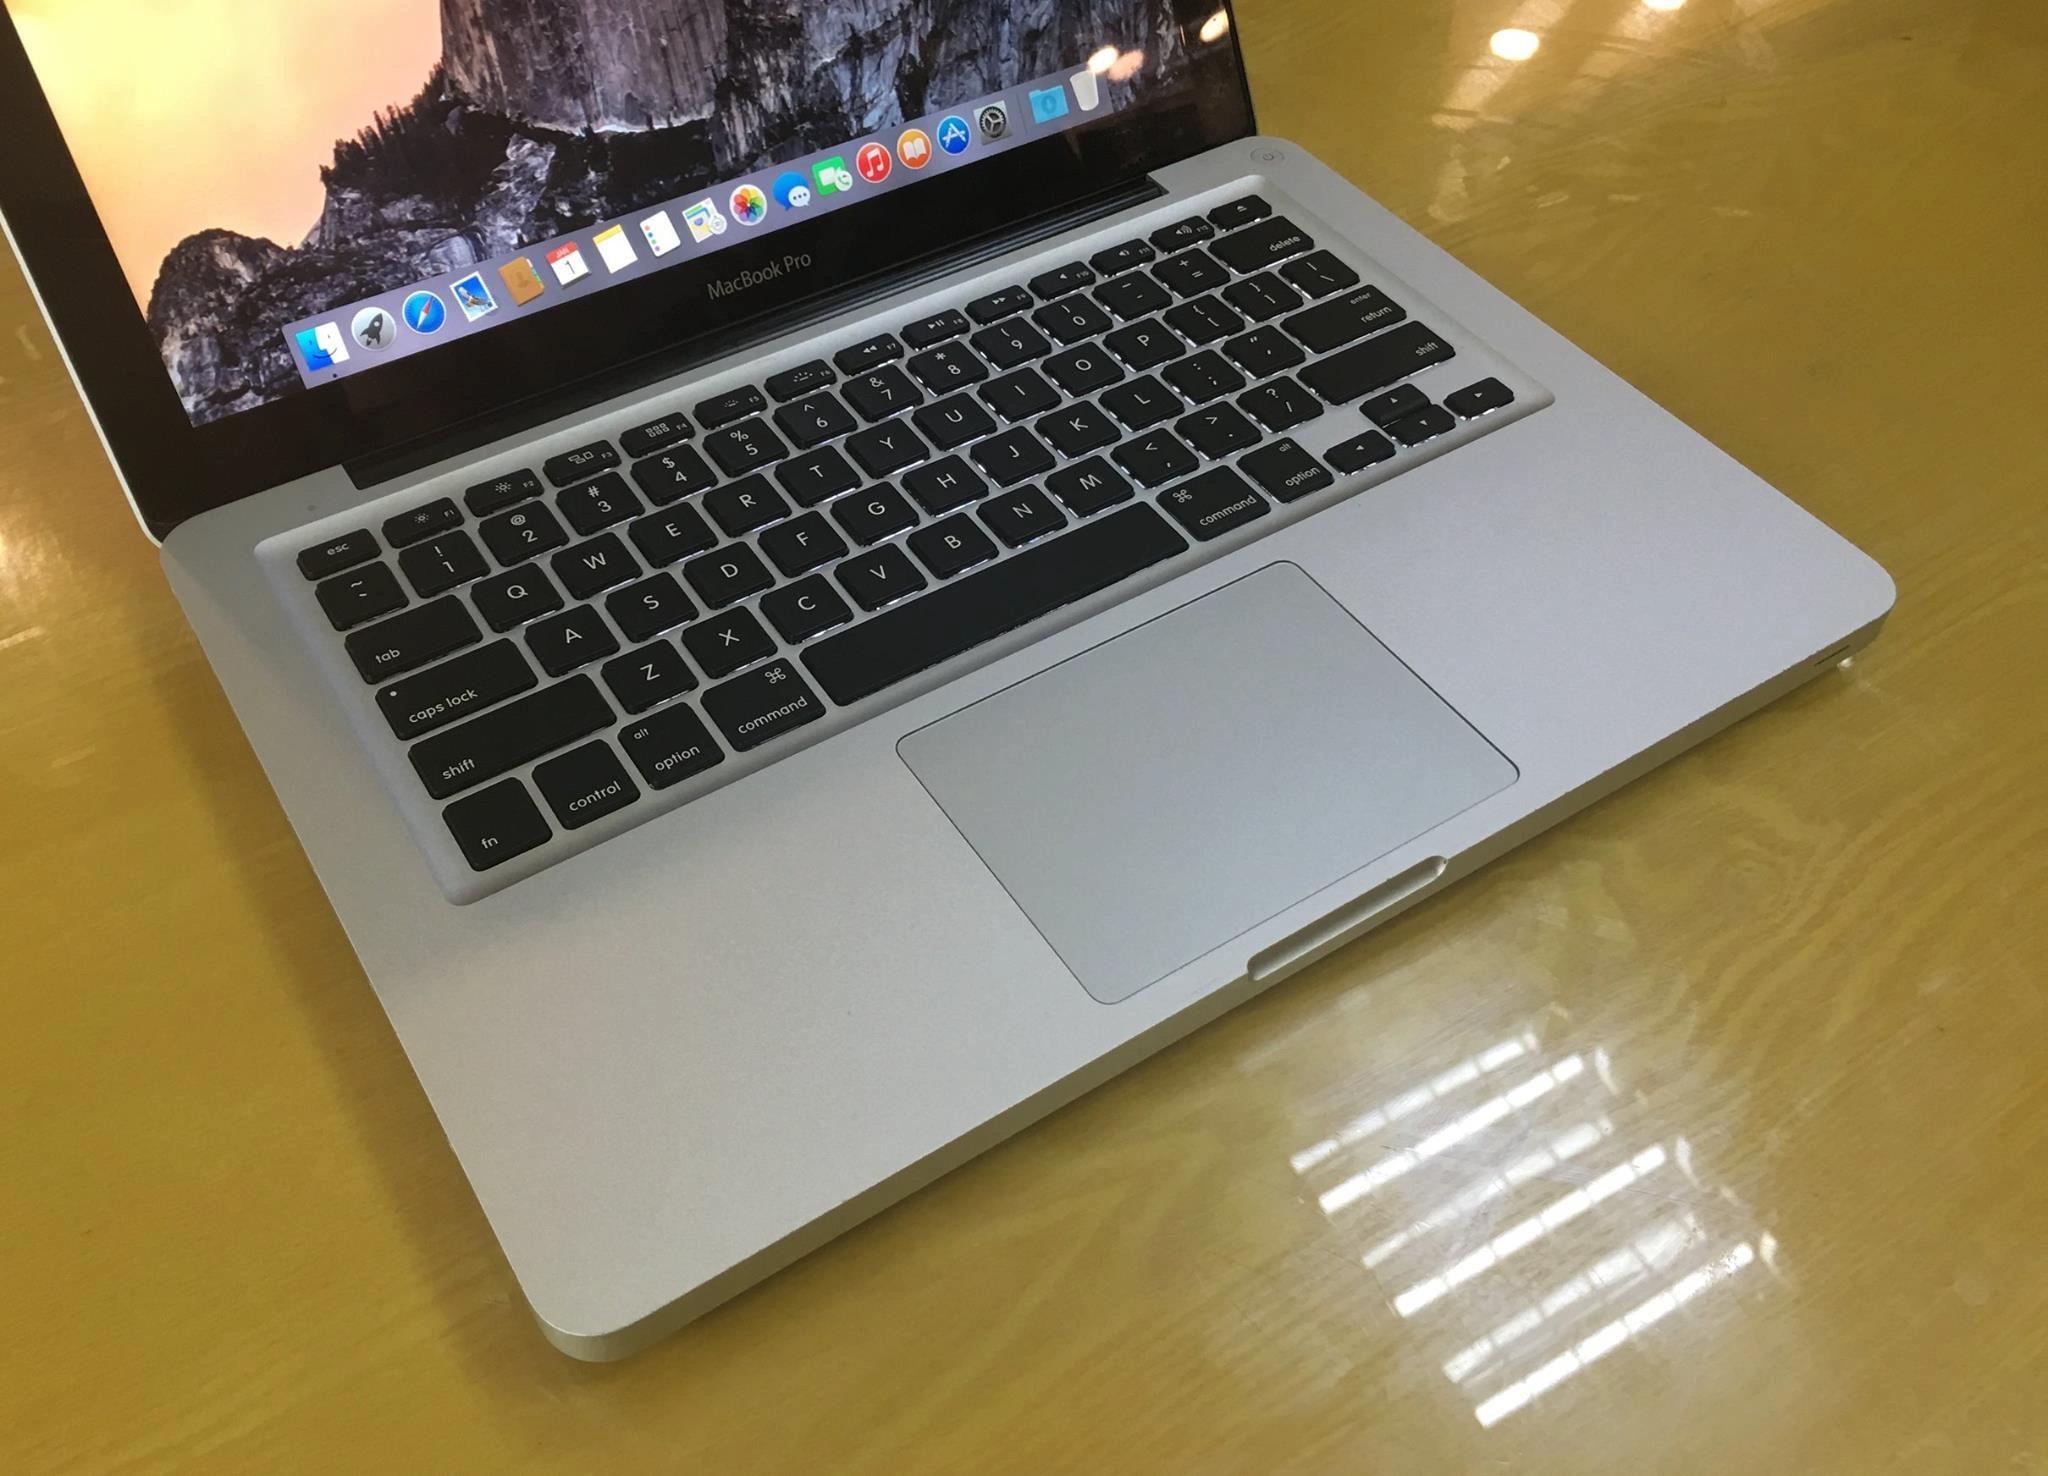 Laptop Apple Macbook Pro 2011 - Intel Core i5, 4GB RAM, HDD 320GB, Intel HD 3000, 13.3 inch